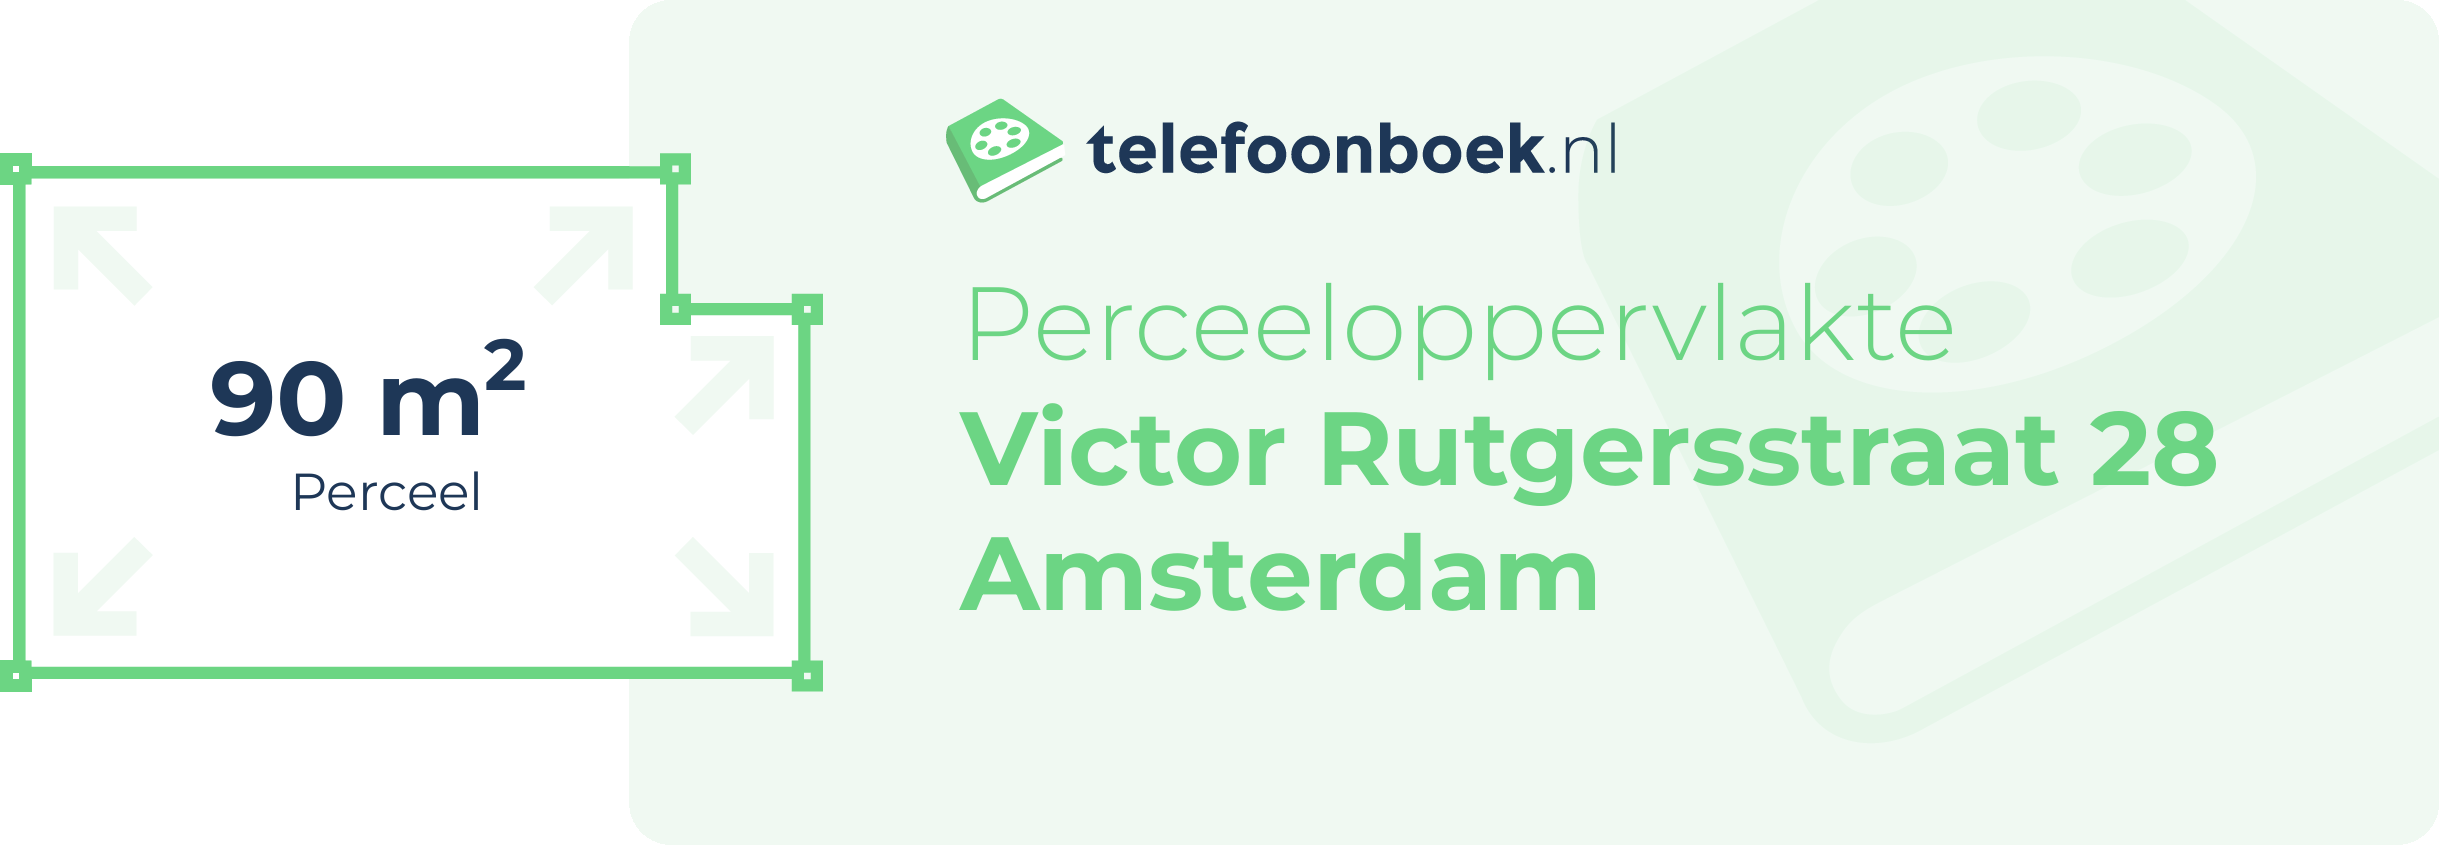 Perceeloppervlakte Victor Rutgersstraat 28 Amsterdam